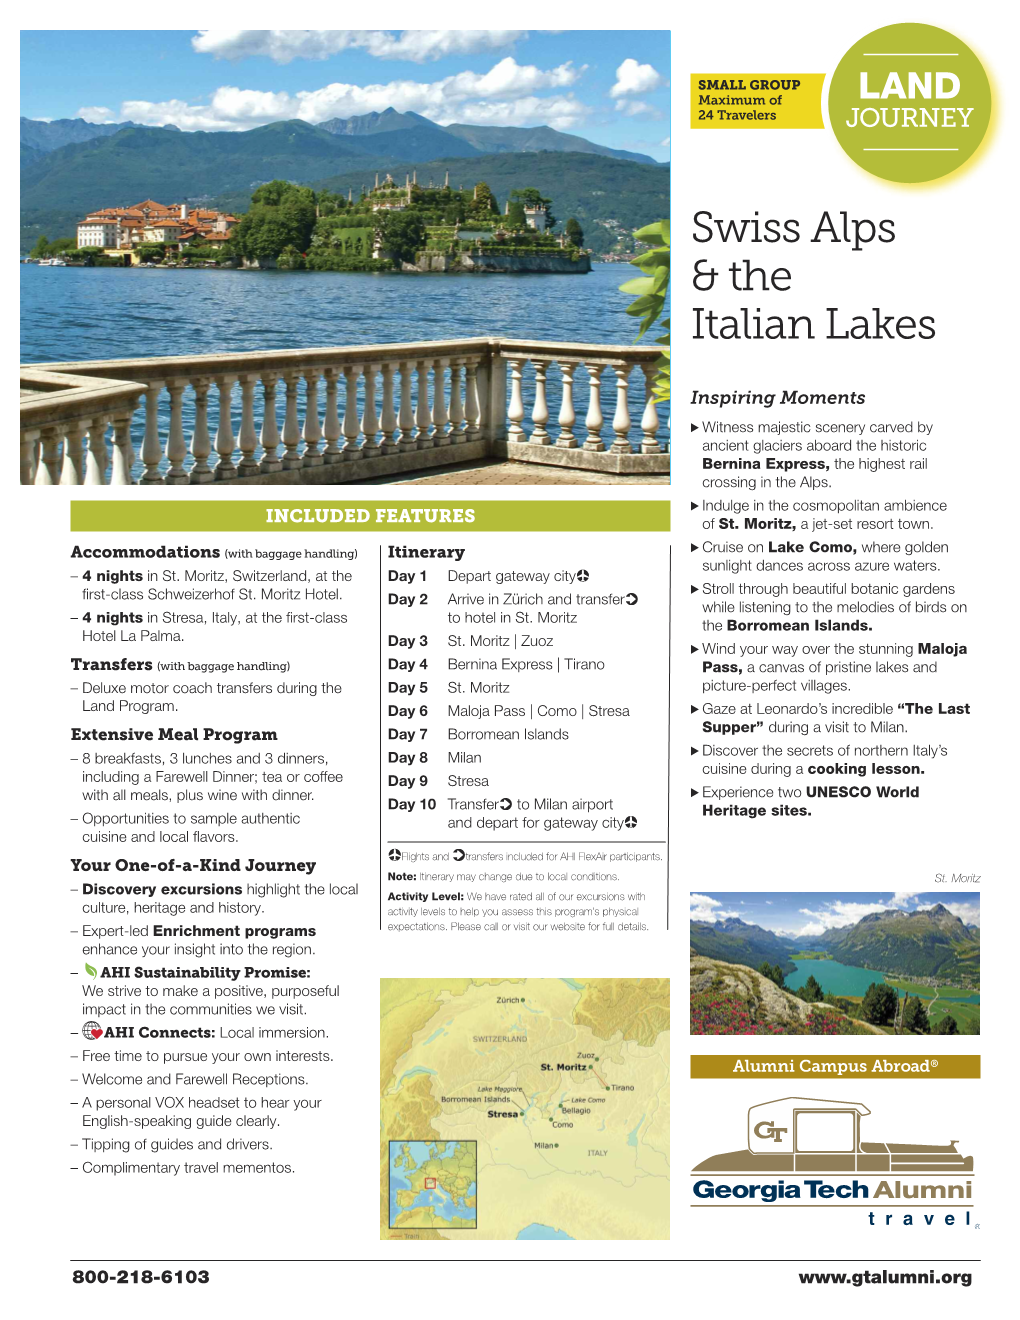 Swiss Alps & the Italian Lakes